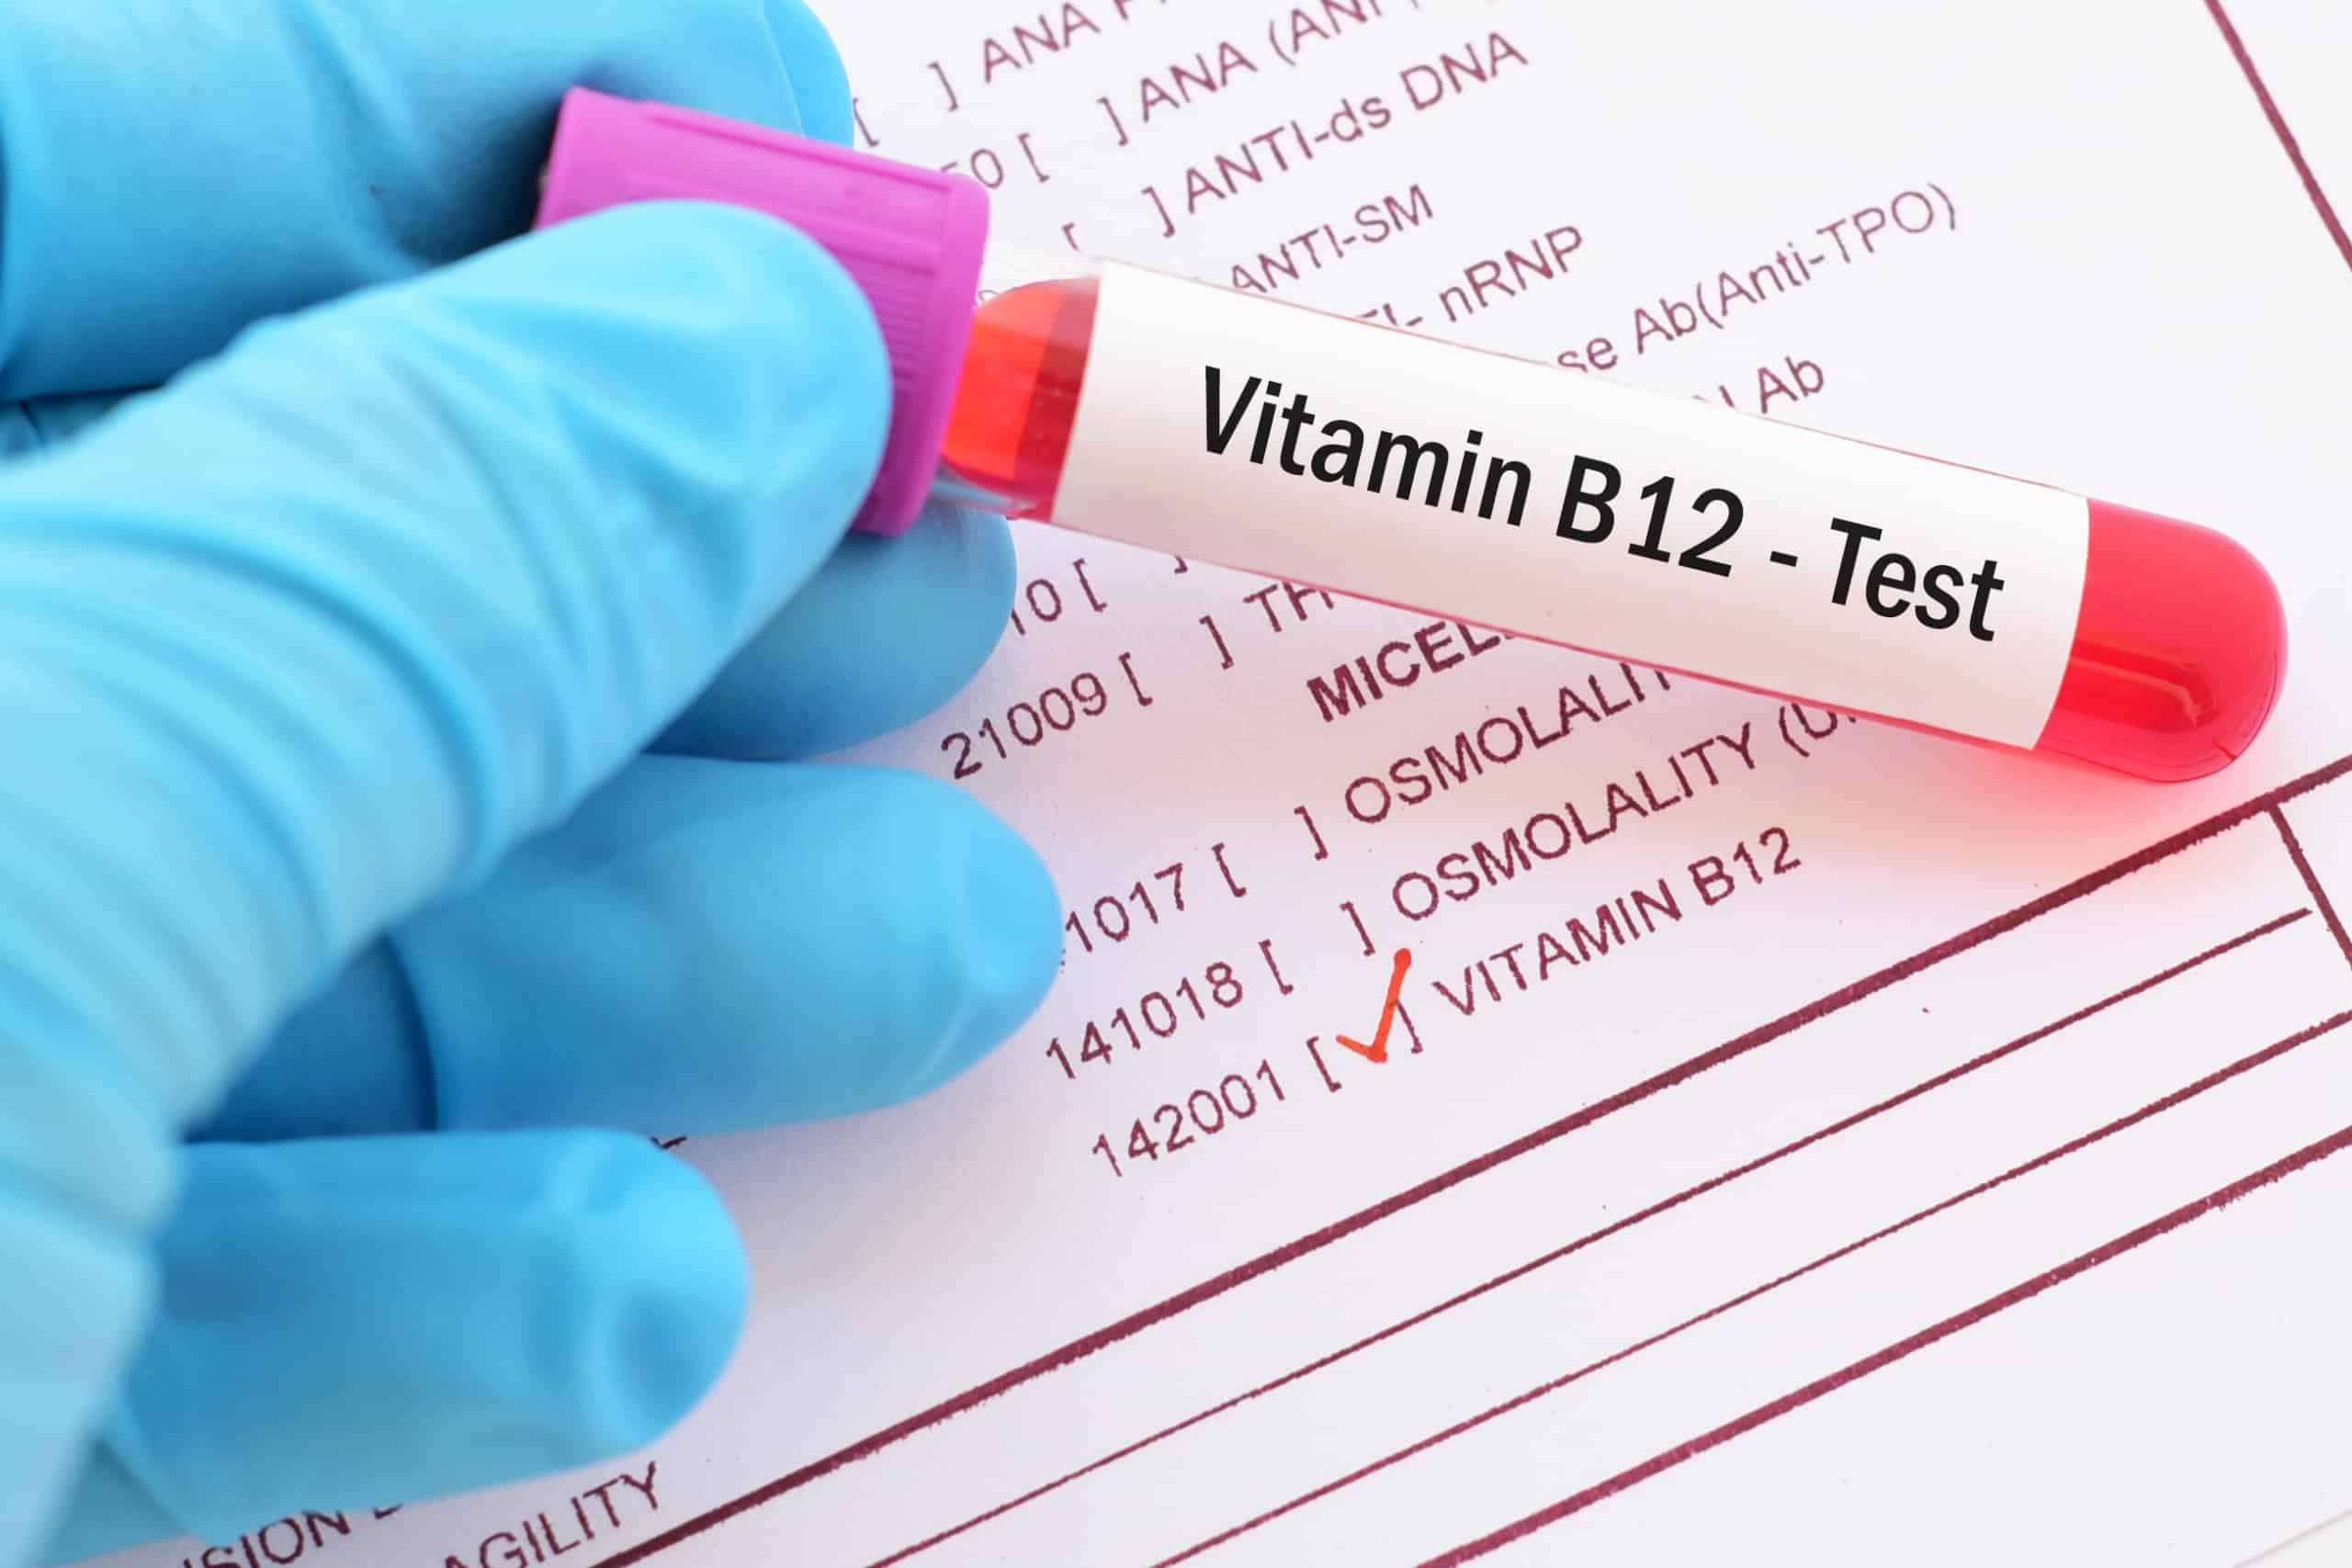 Vitamin B12 blood level test vial.